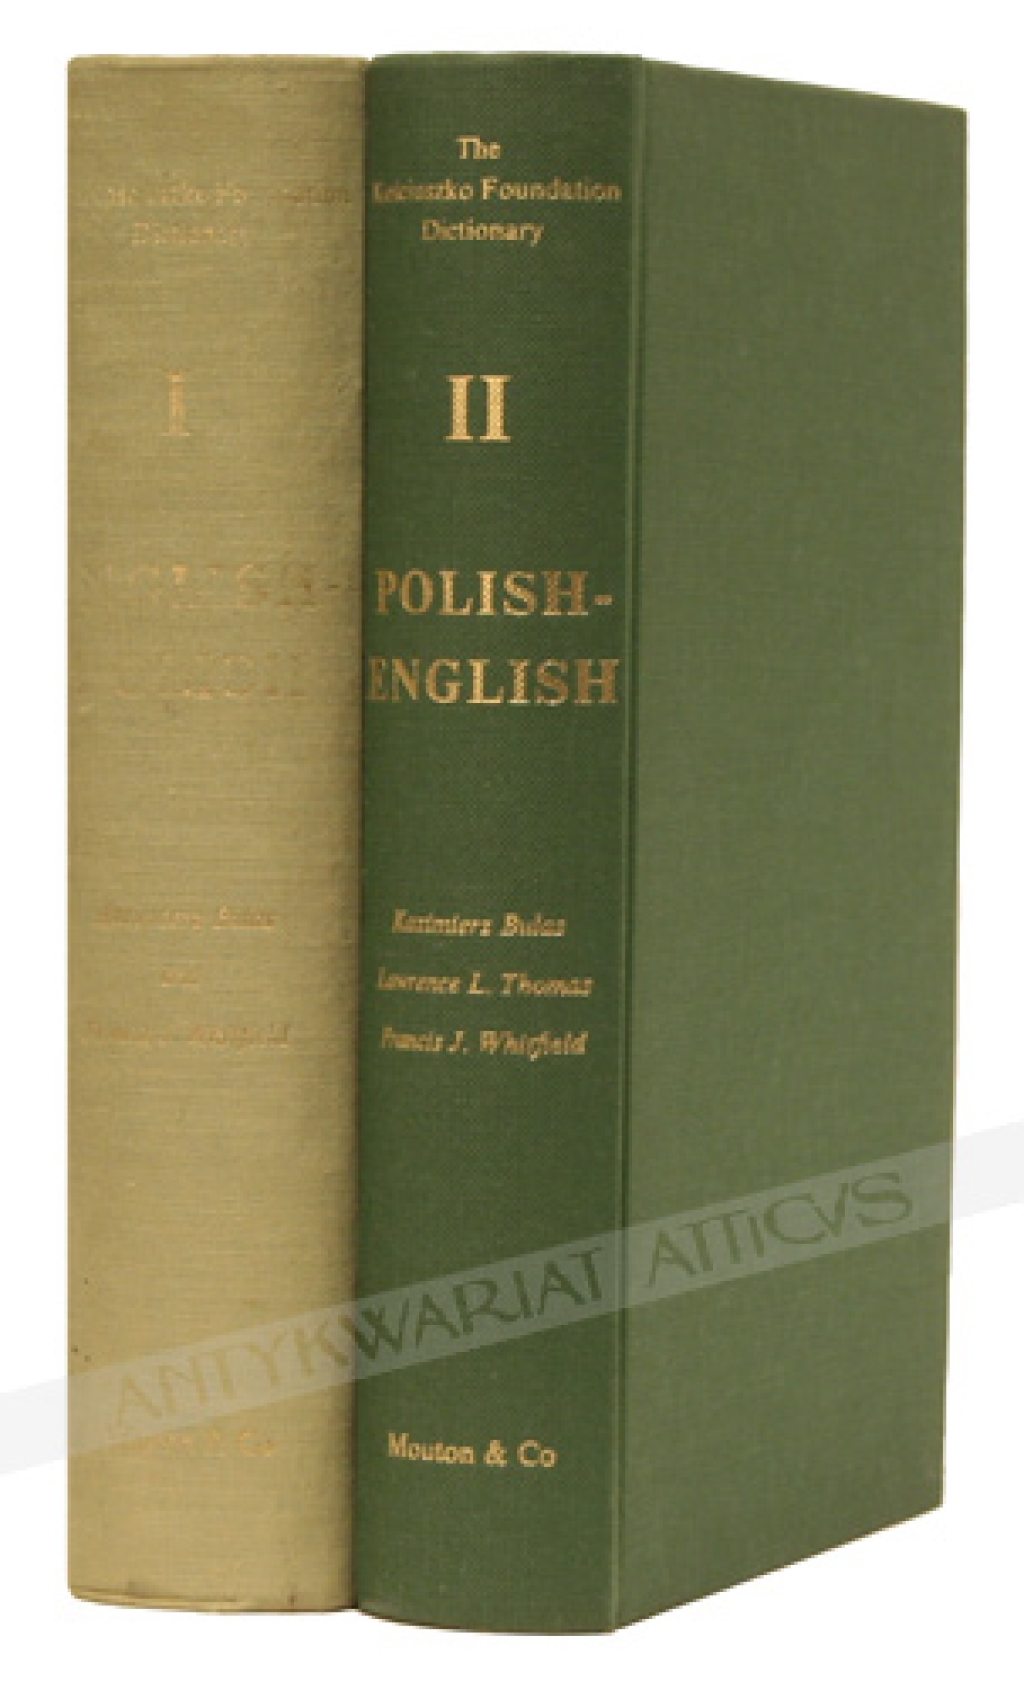 I. English-Polish DictionaryII. Polish-English Dictionary